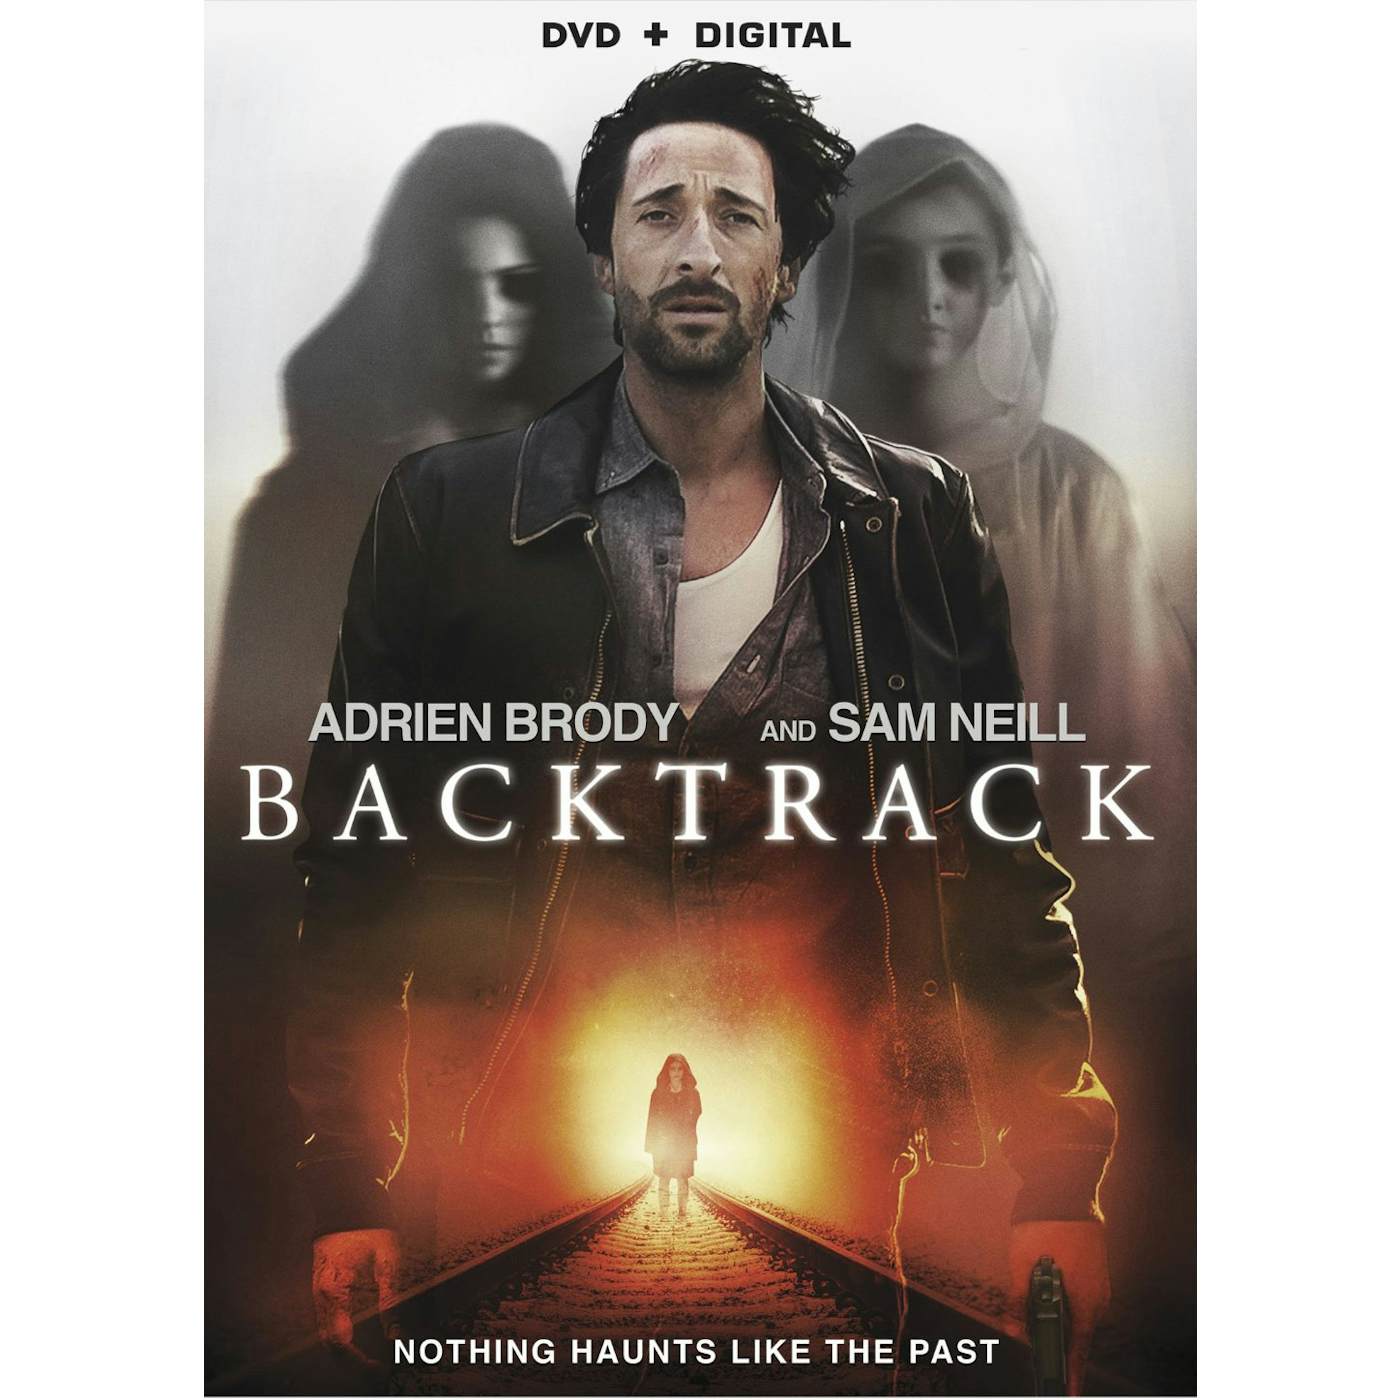 BACKTRACK DVD